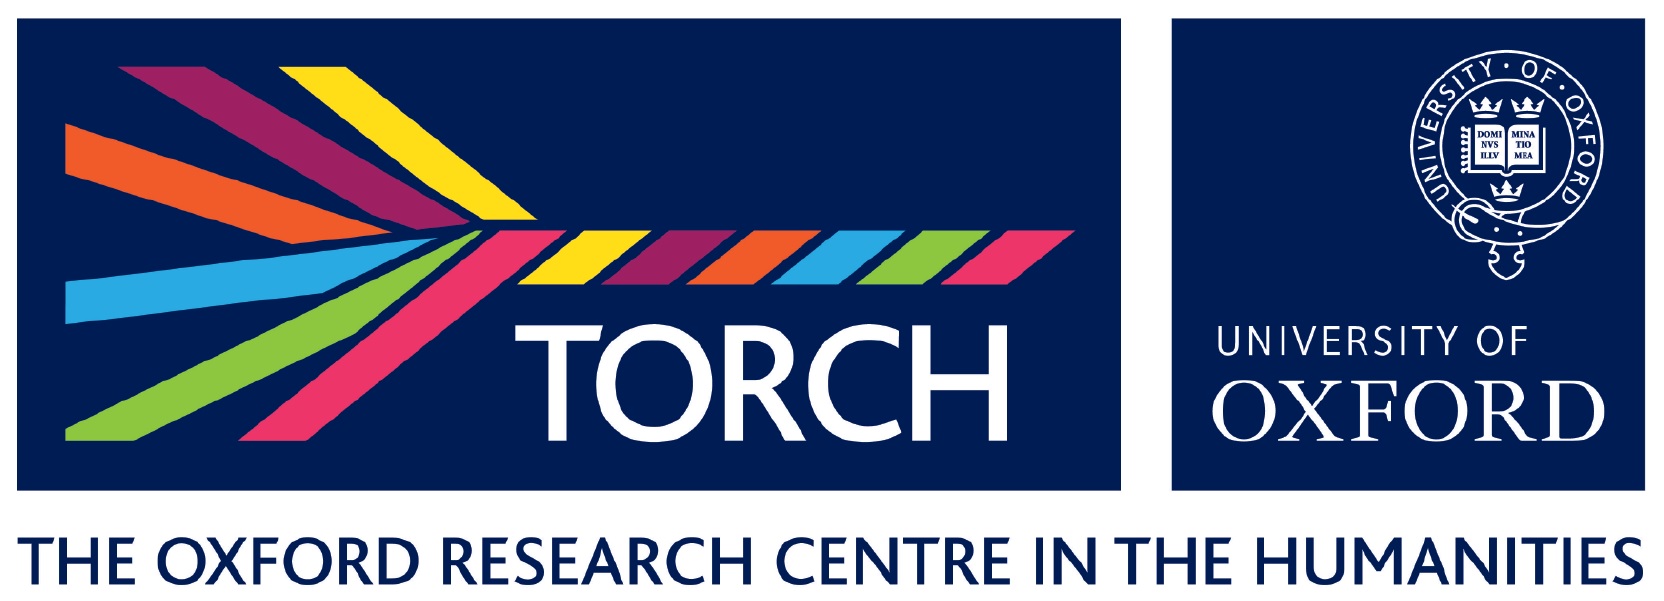 Torch New Logo